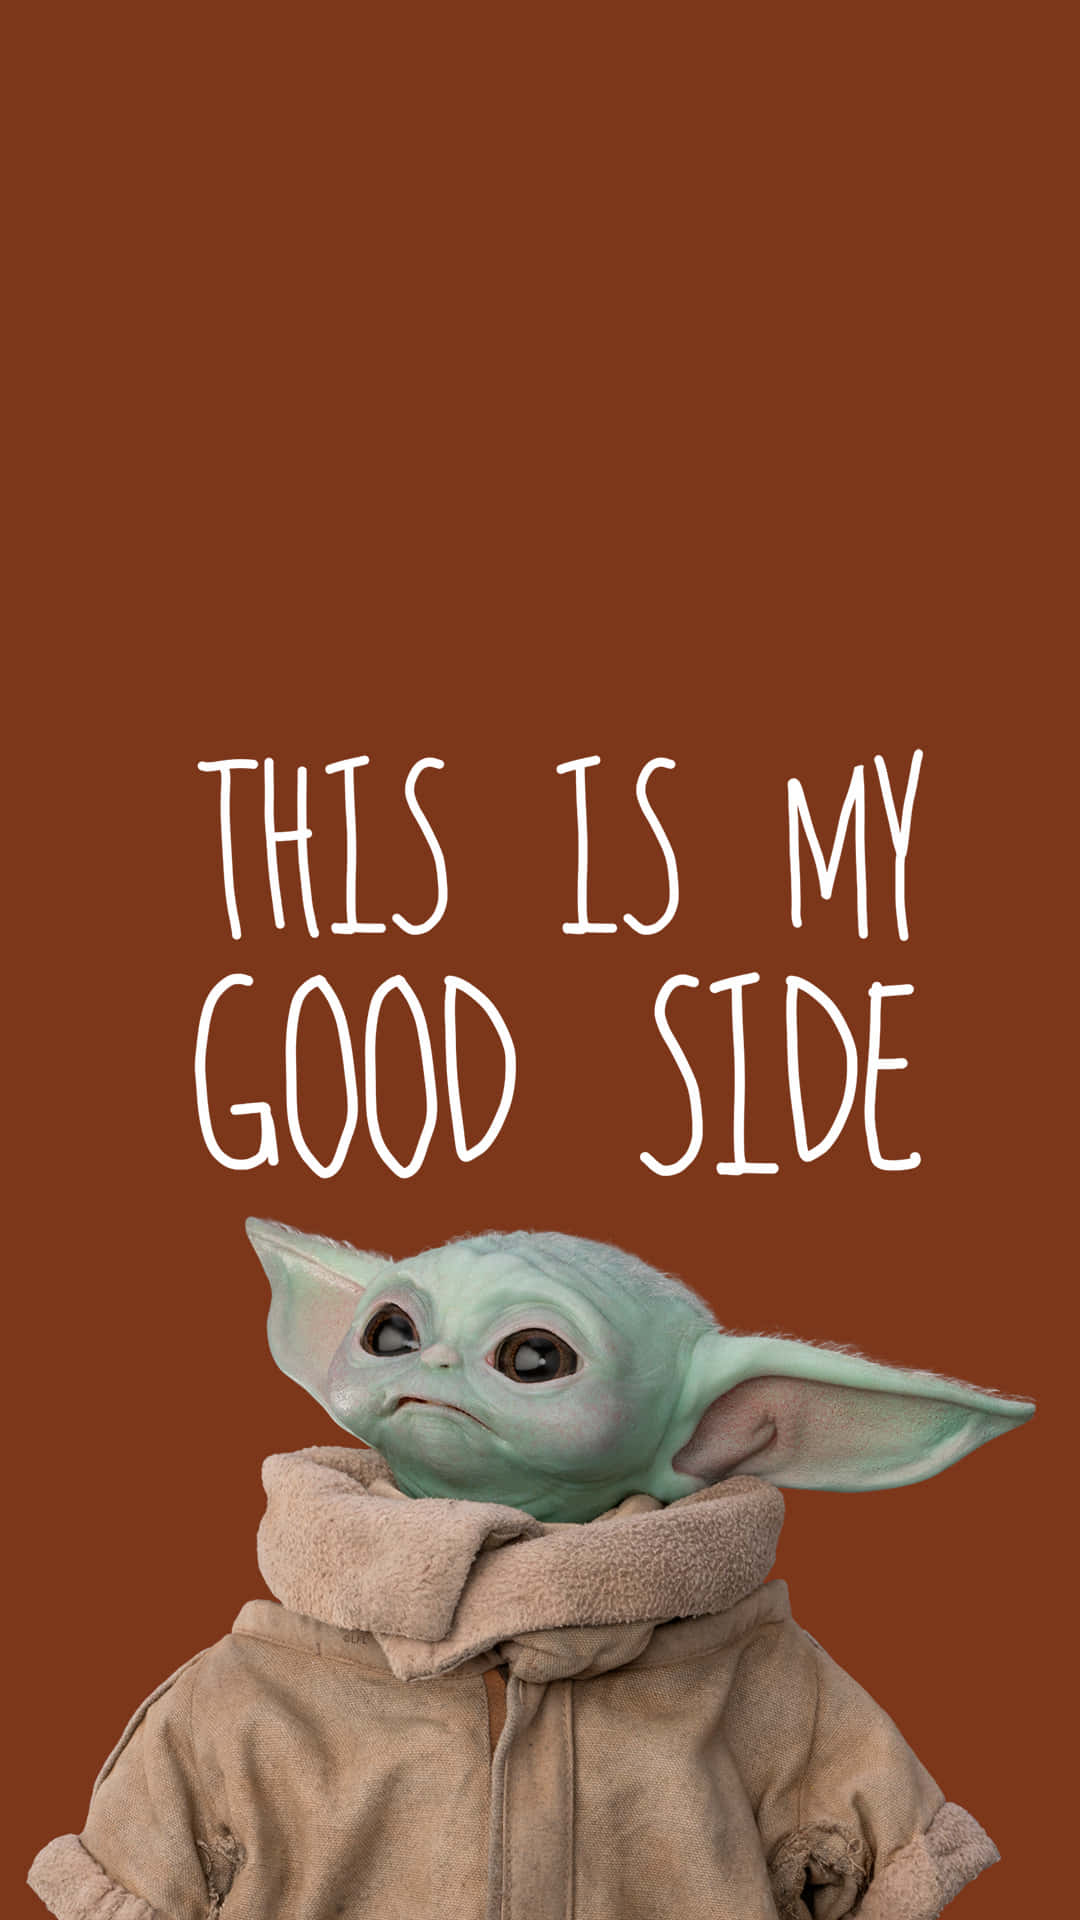 Baby Yoda's Radiant Innocence